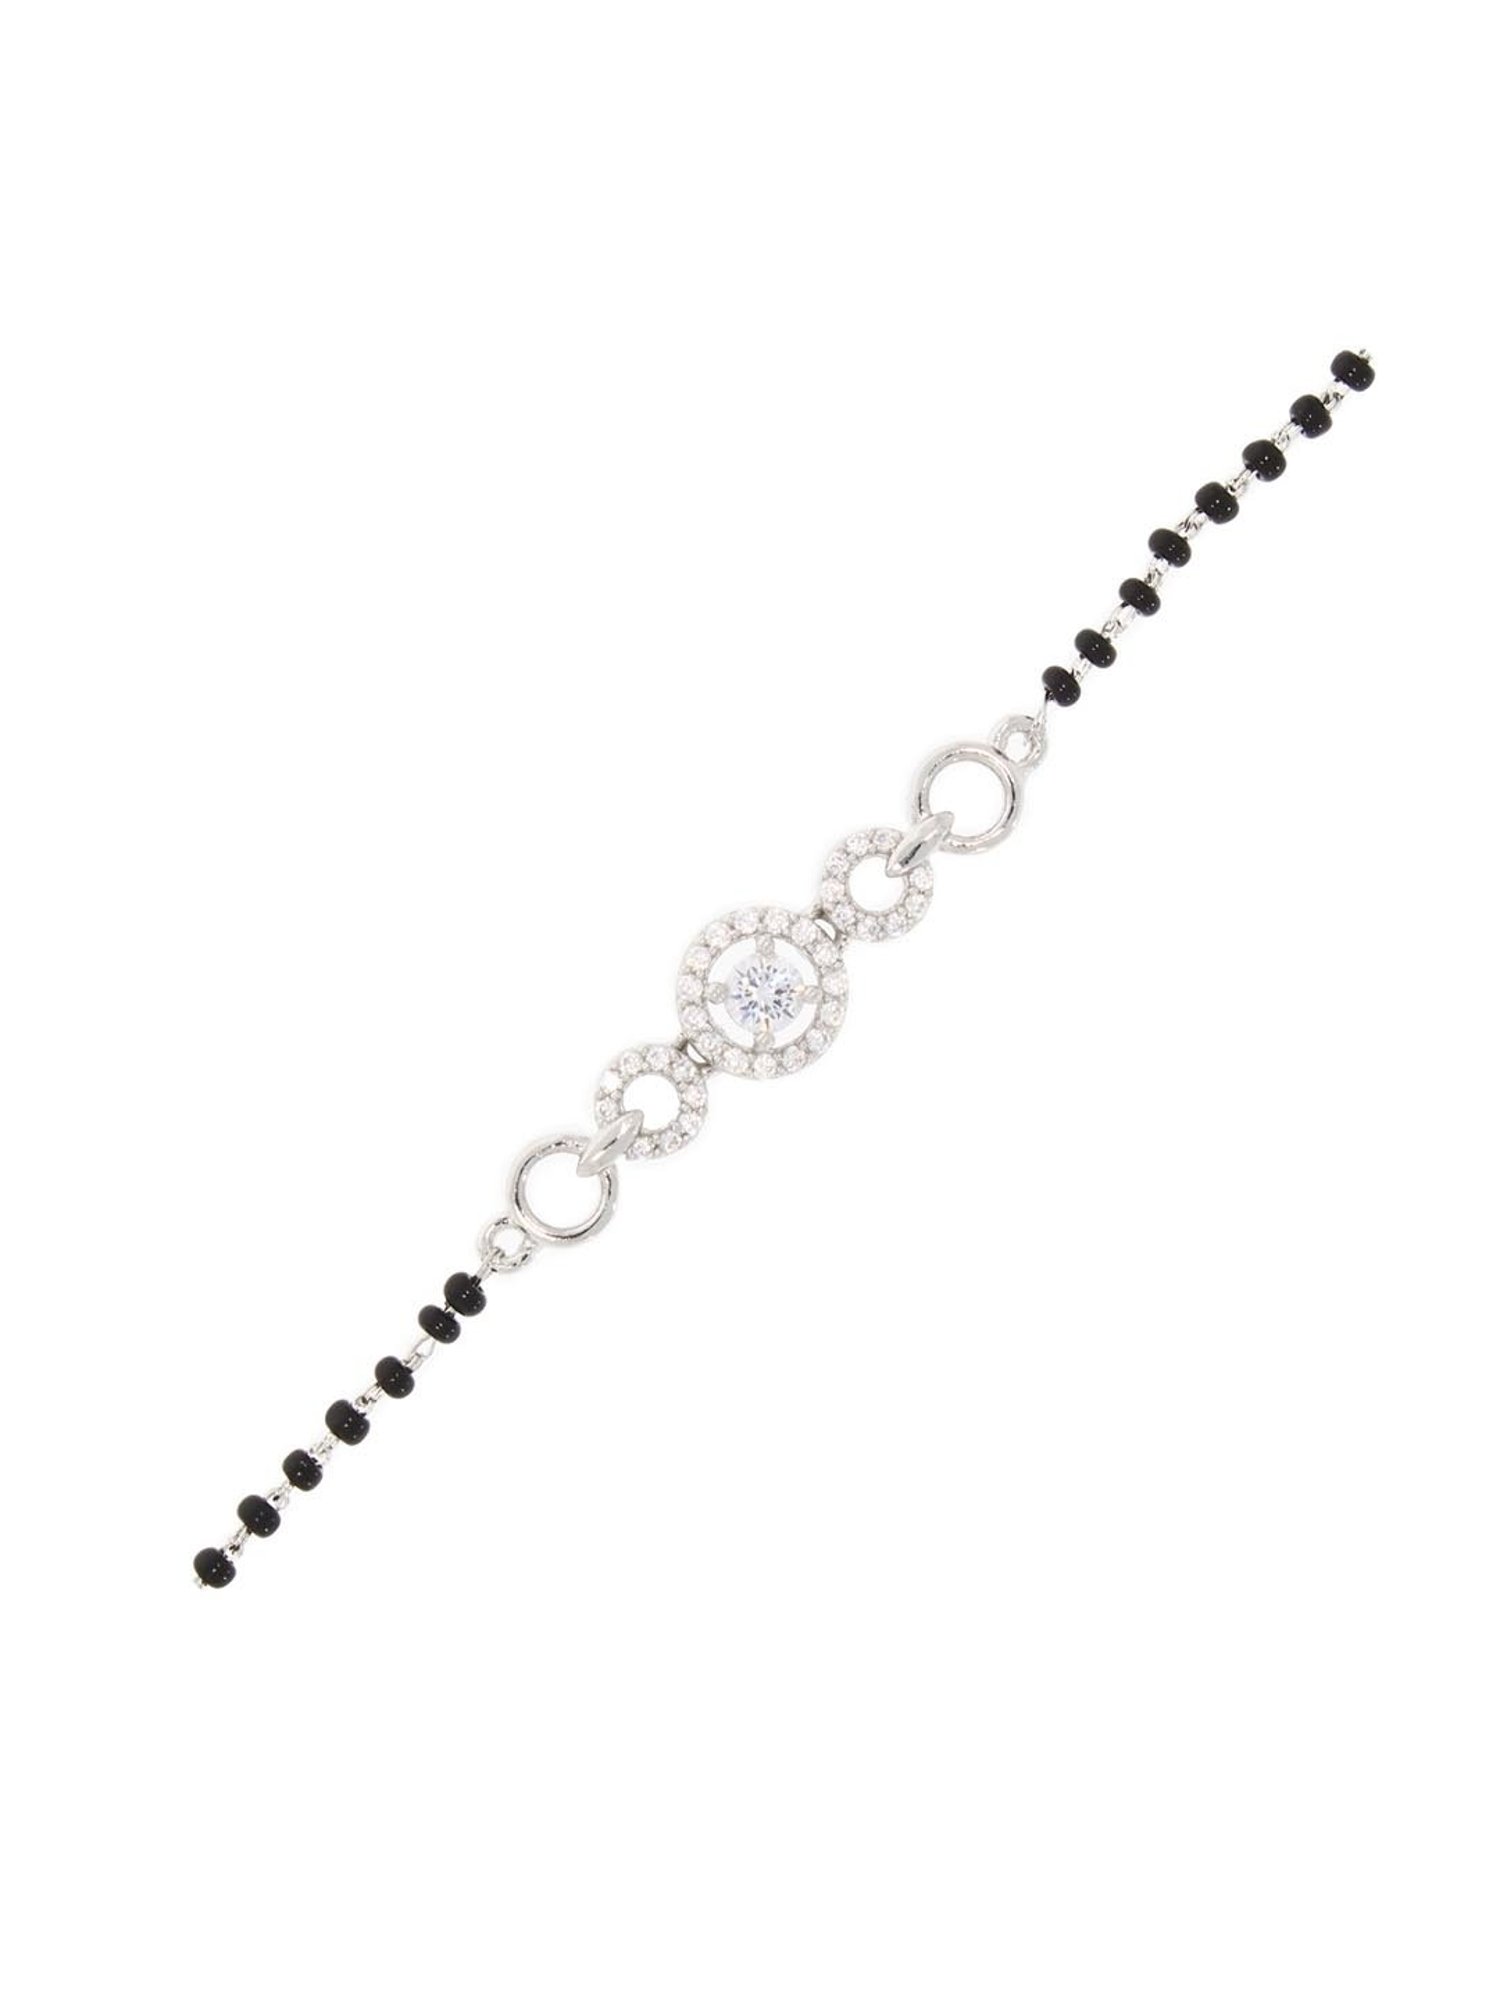 CLARA 925 Sterling Silver Bow Hand Mangalsutra Bracelet Black Beads, R